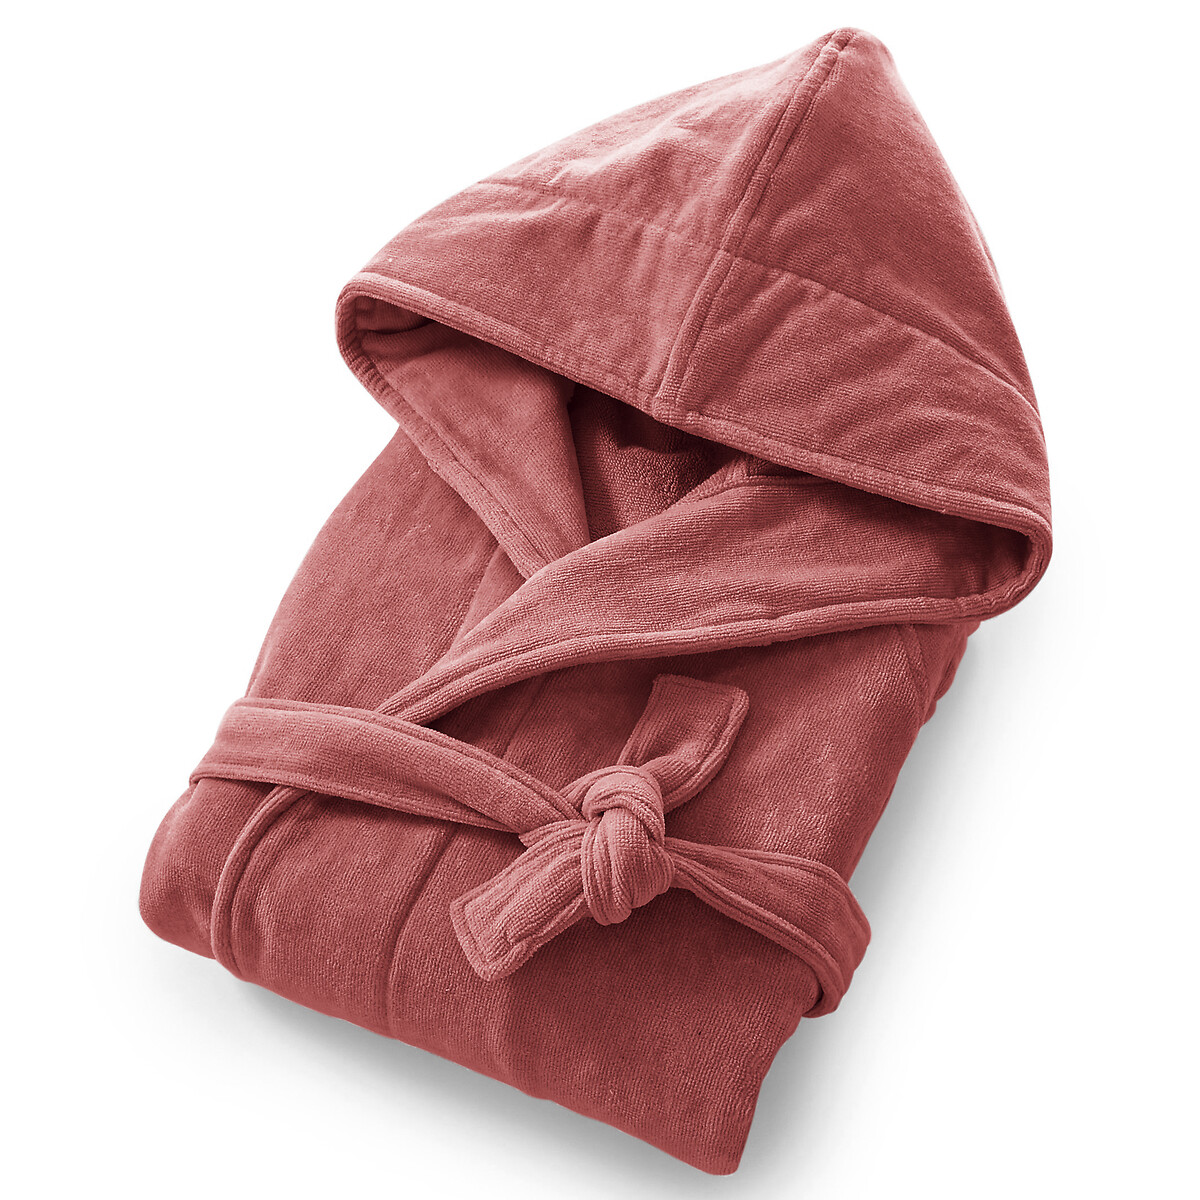 Халат махровая велюровая ткань 450 гм качество Best 46/48 (FR) - 52/54 (RUS) розовый